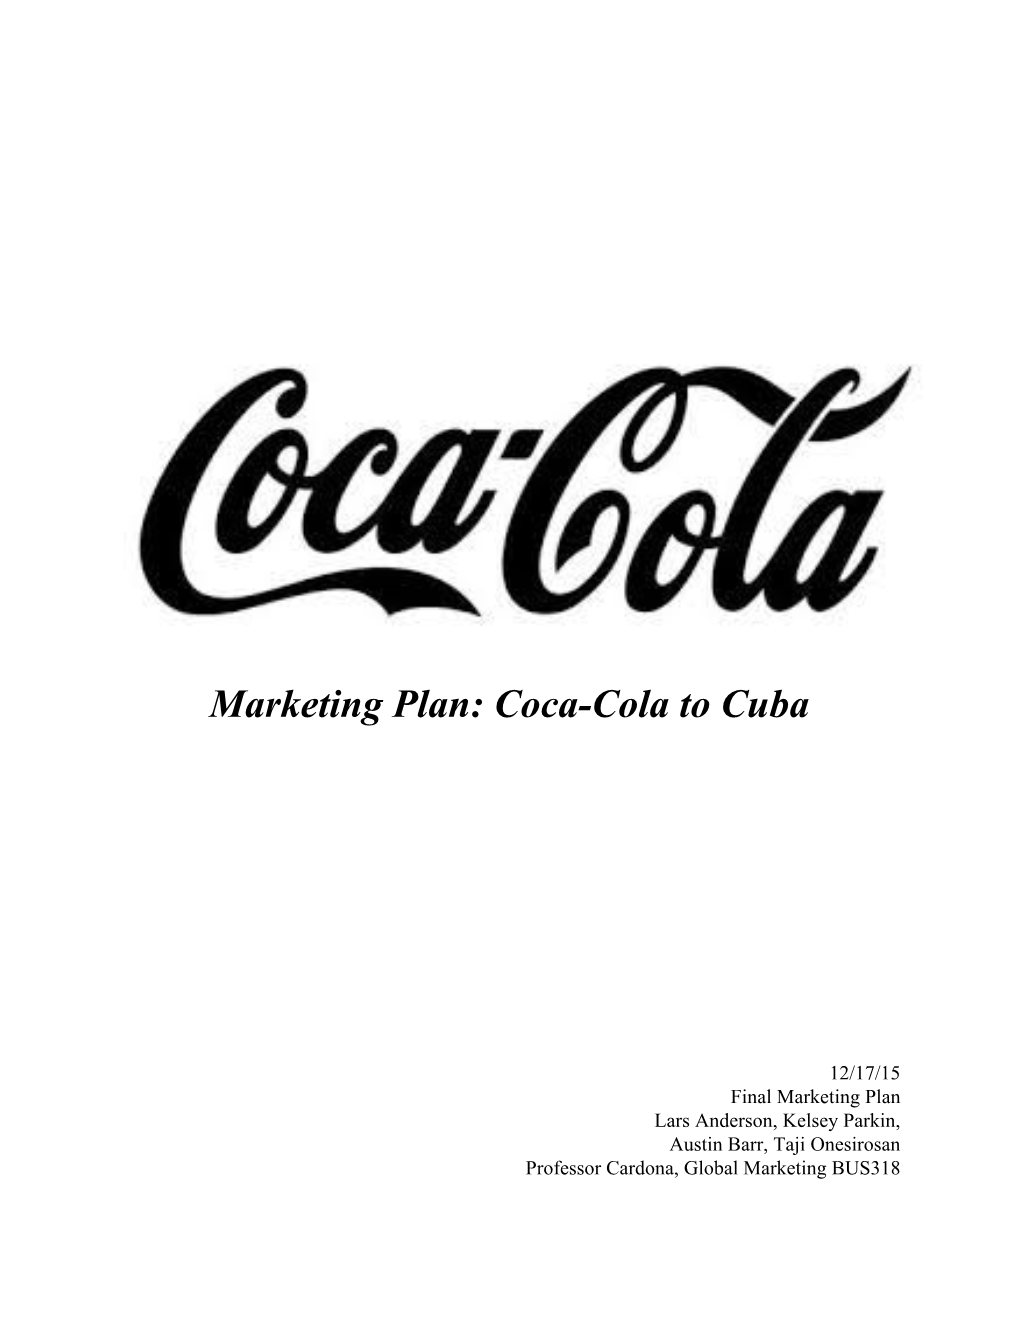 Marketing Plan: Cocacola to Cuba